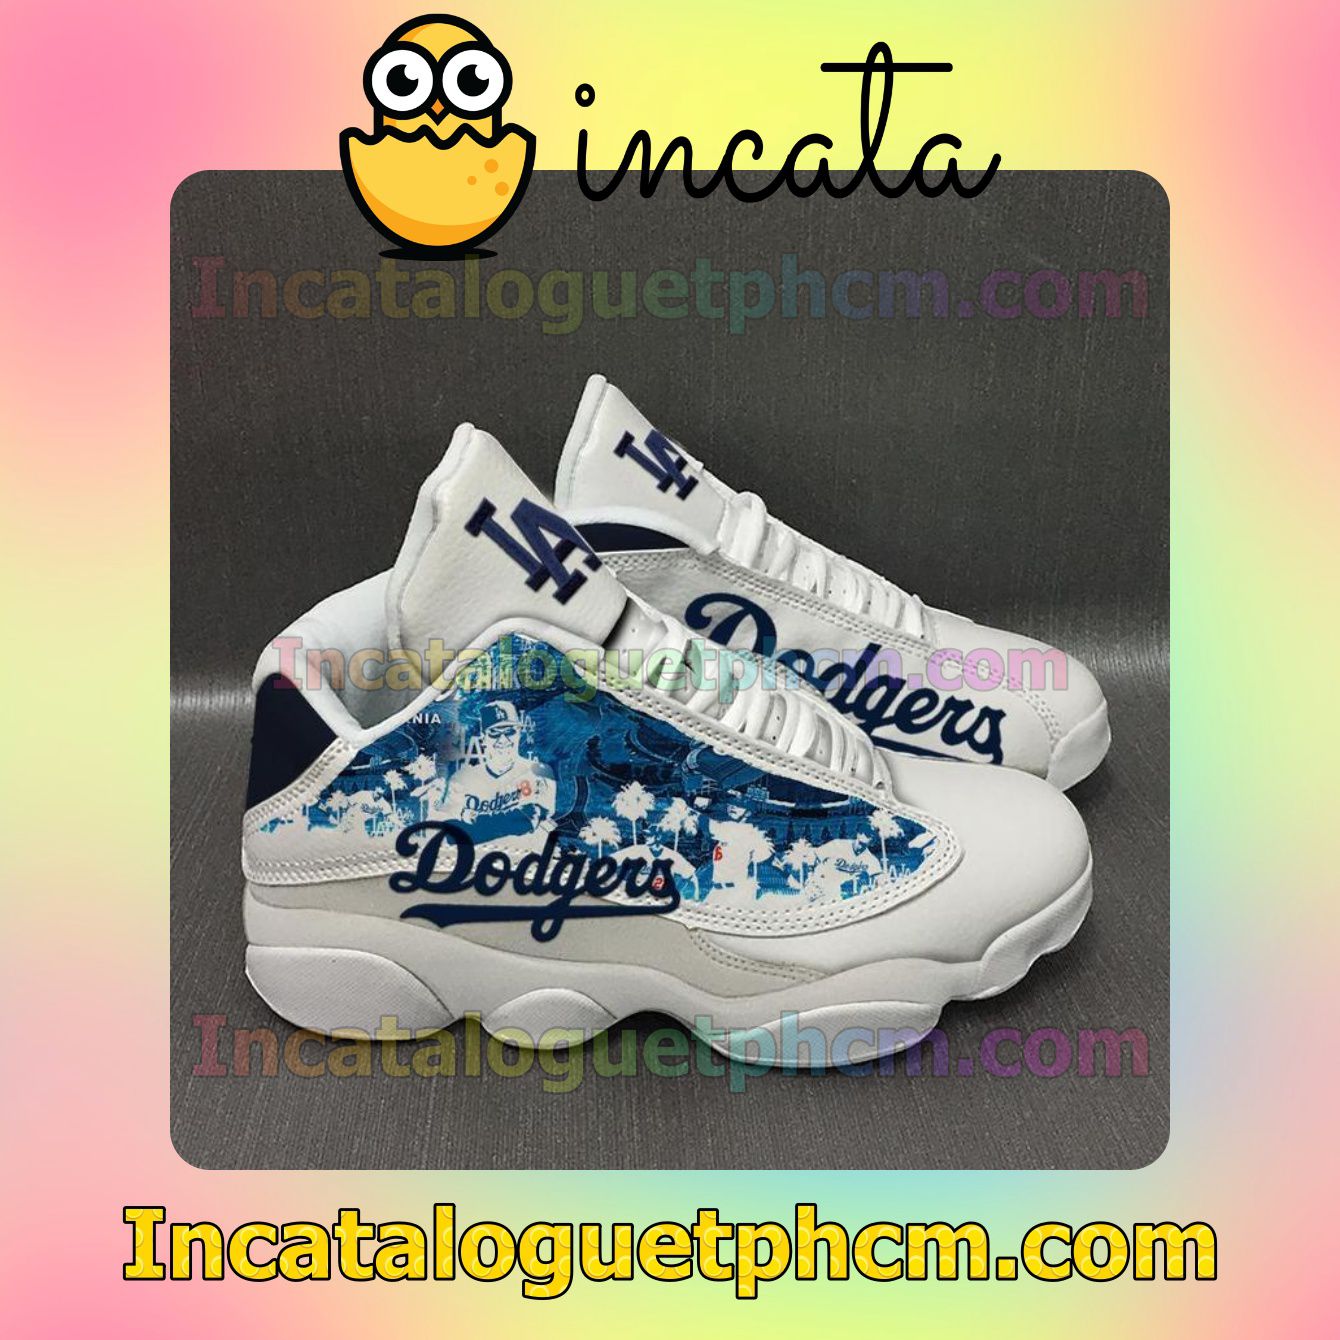 Los Angeles Dodgers Football White Jordans